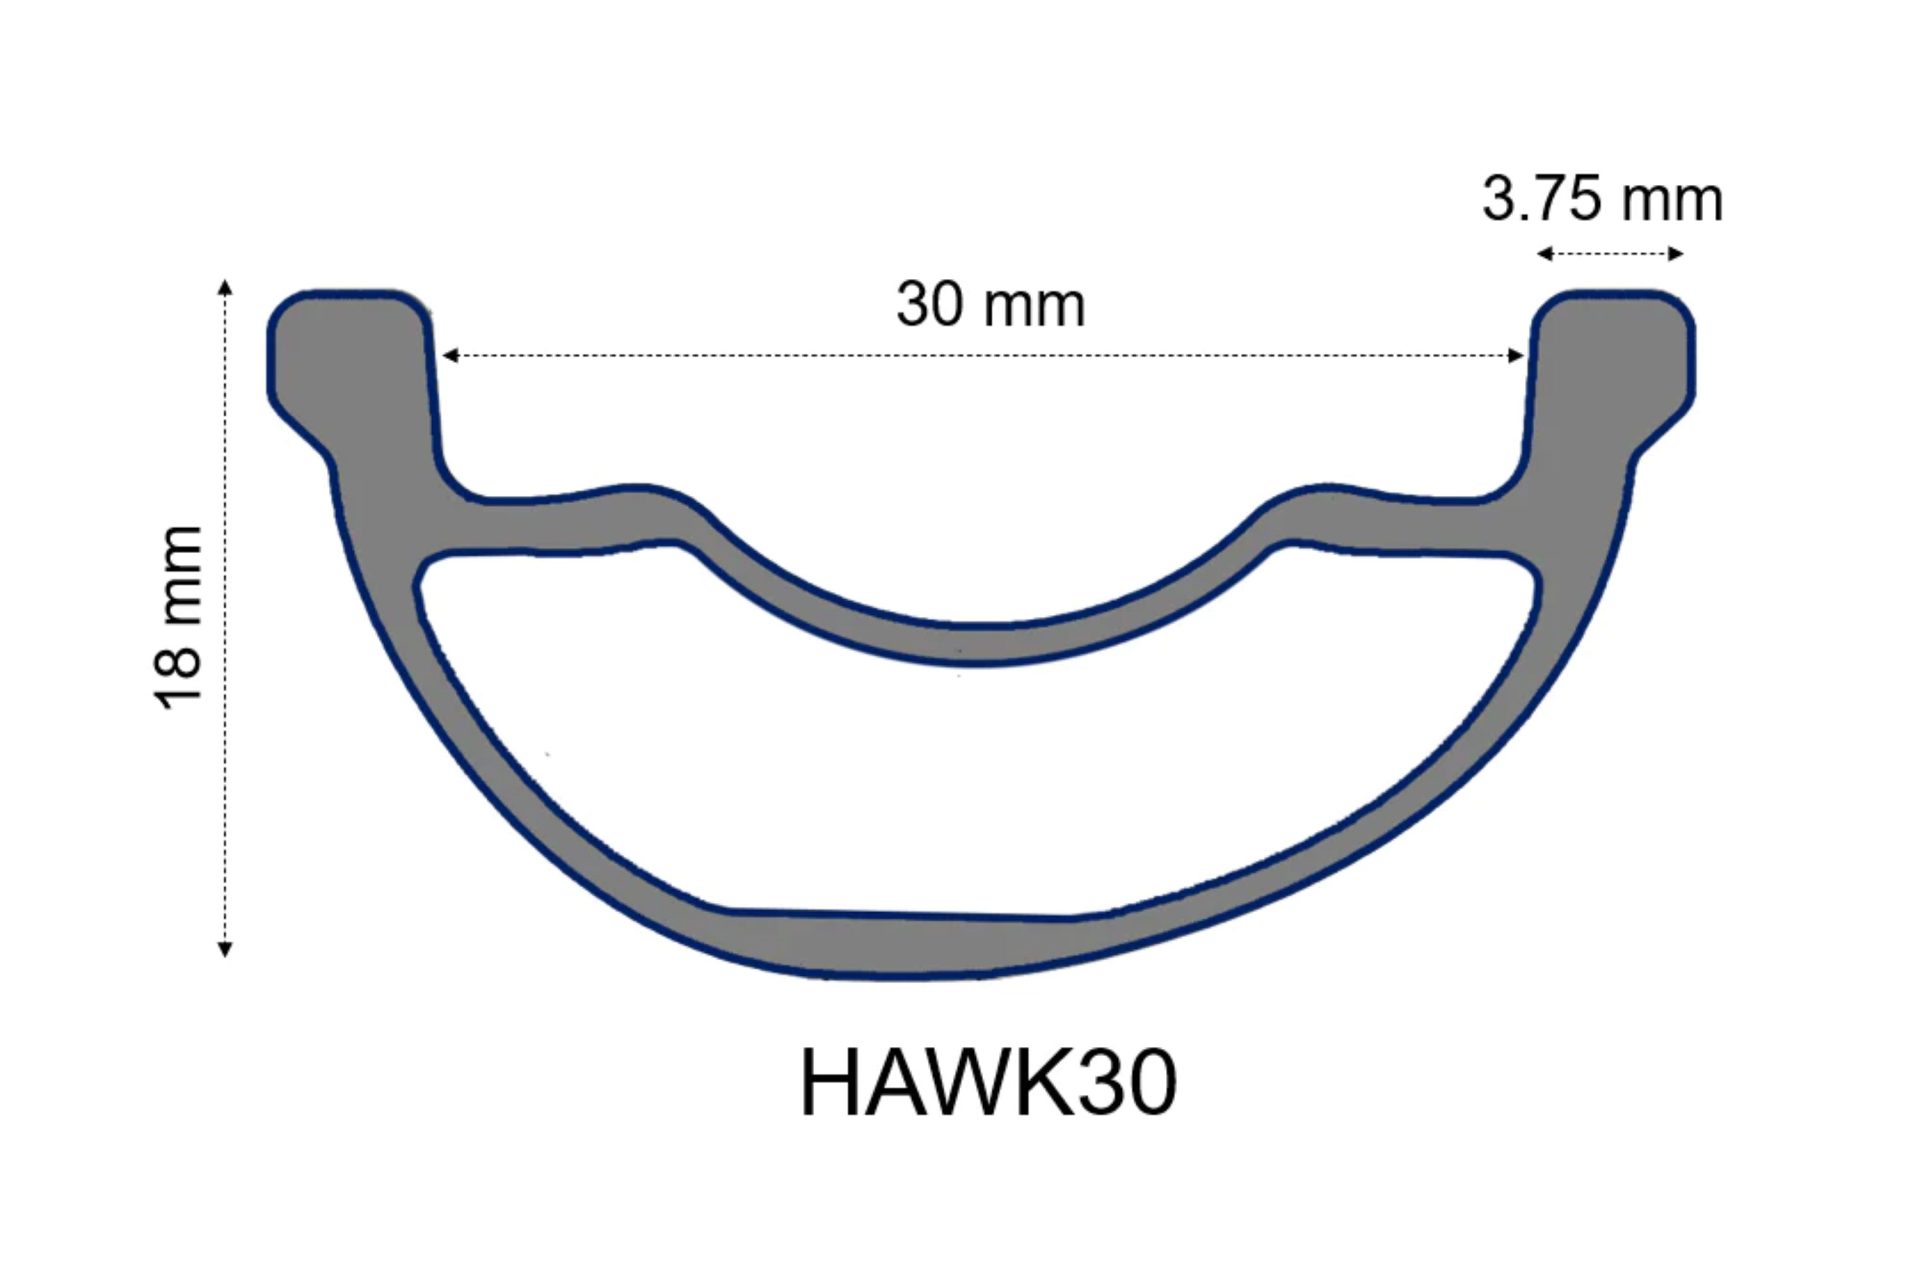 Berd Hawk30 rim profile schematic